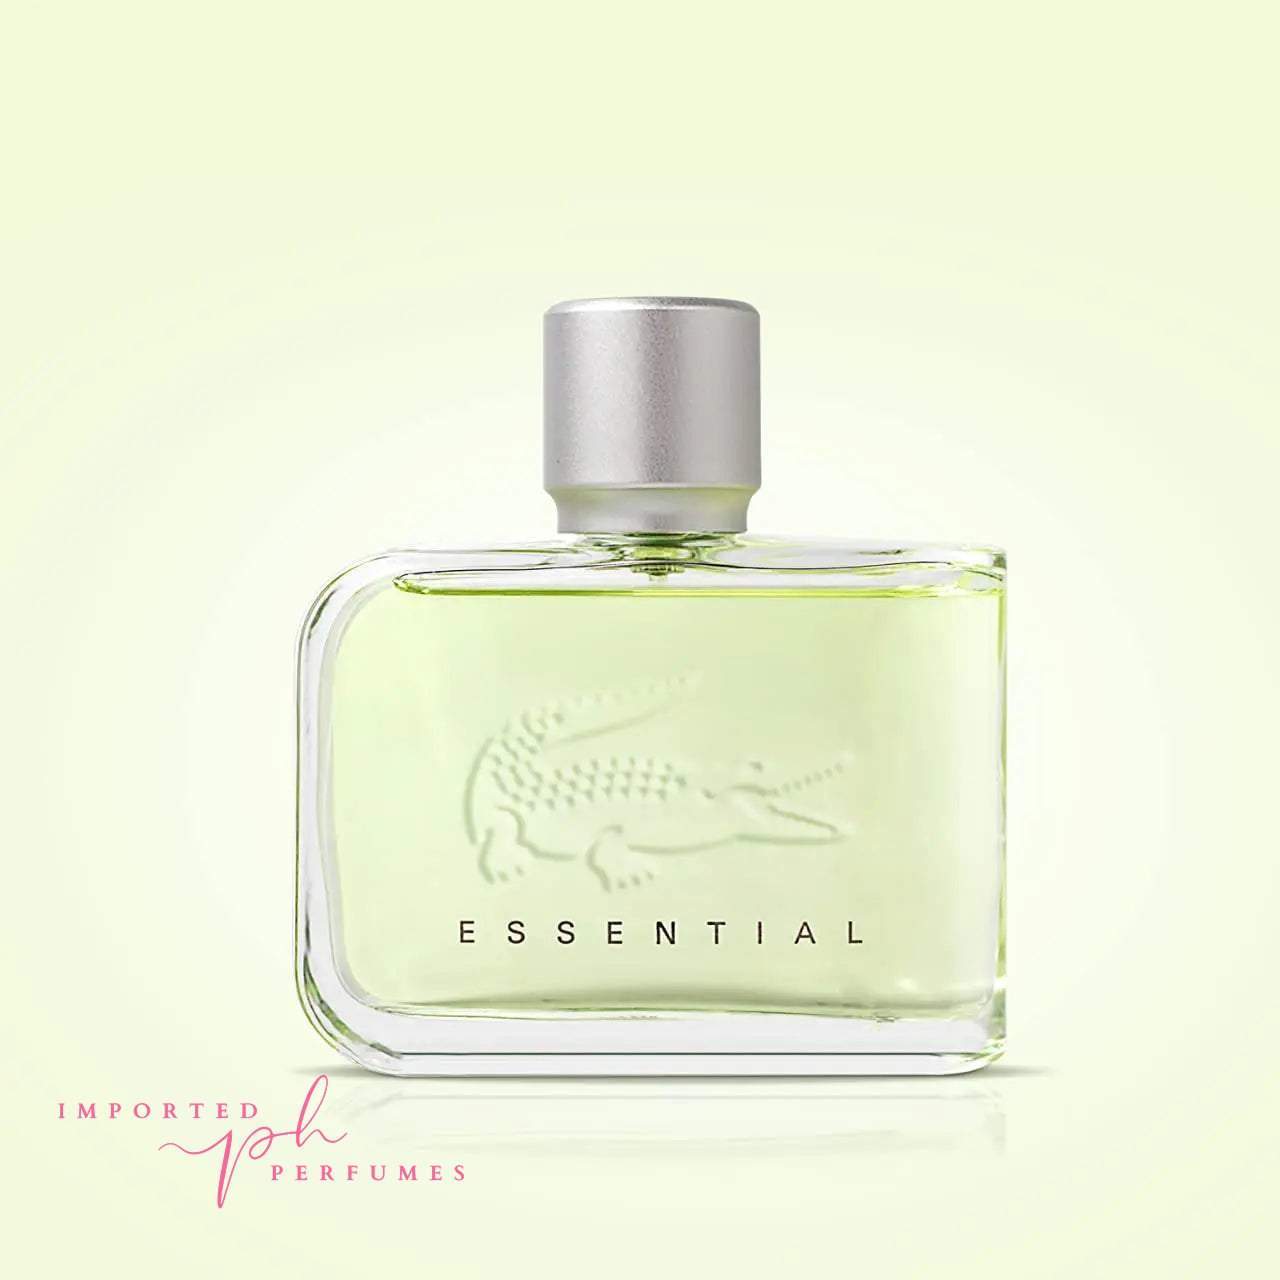 Lacoste Essential Green Eau De Toilette Pour Homme 125ml-Imported Perfumes Co-100ml,125ml,essential,green,Lacoste